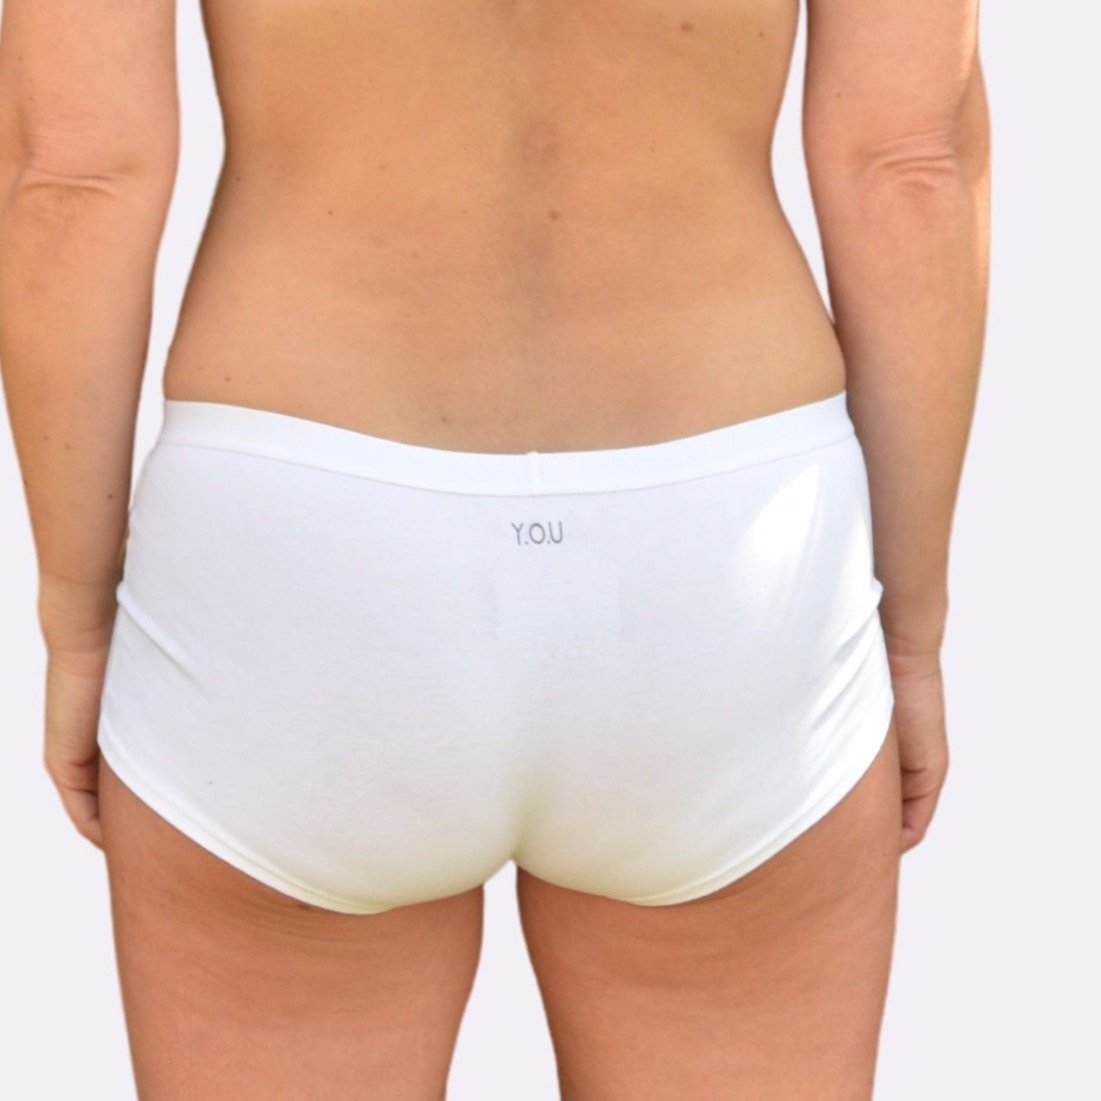 White Boy Shorts on a white background - Model Image - Back View